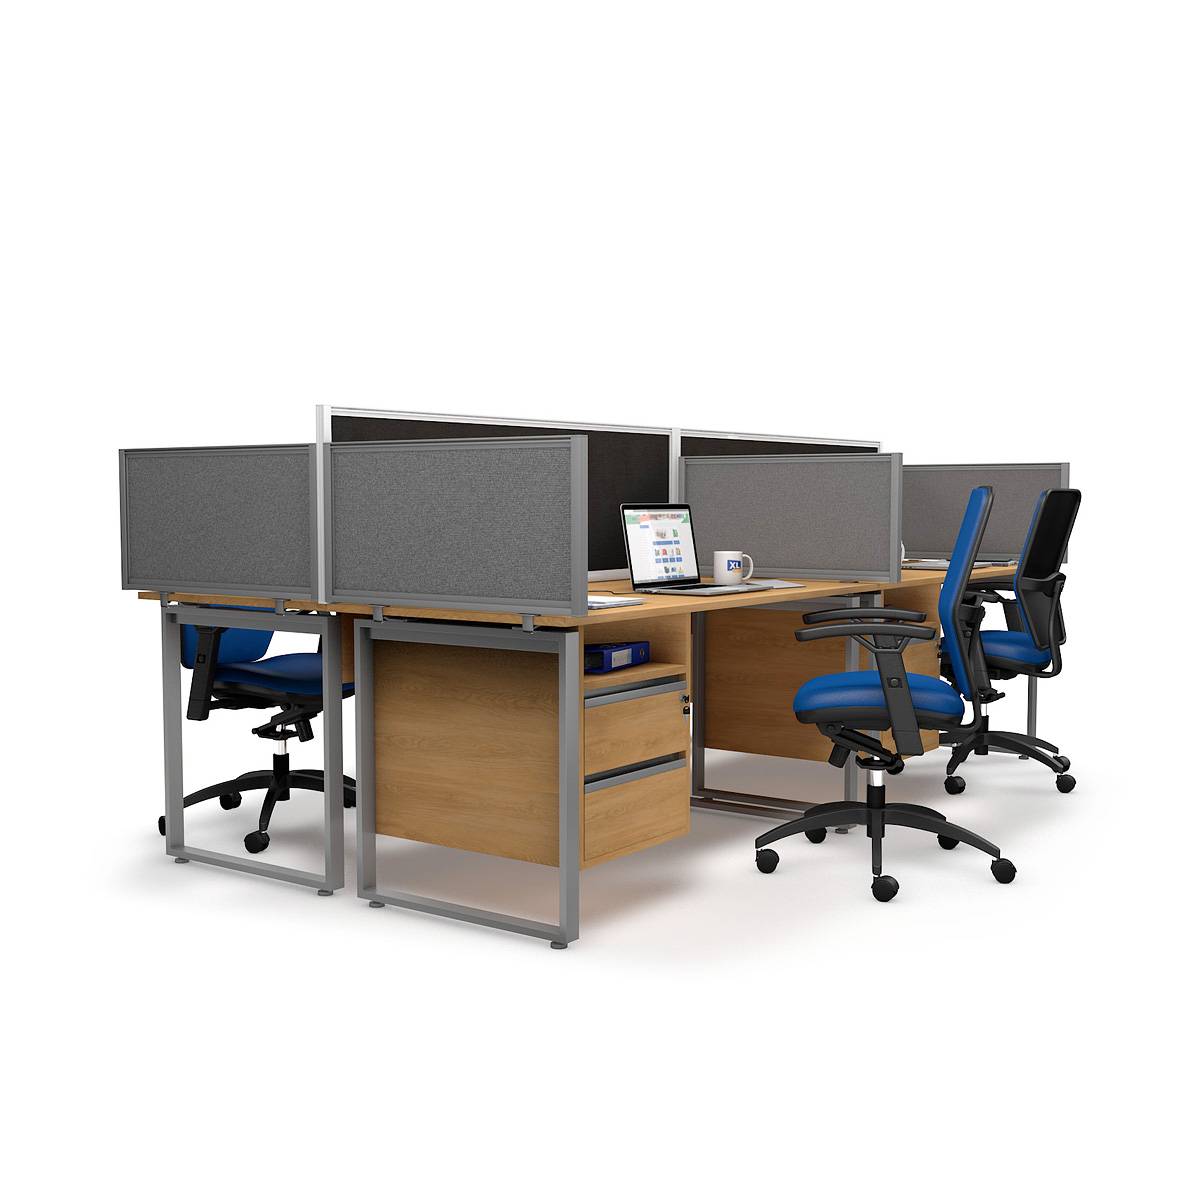 Desk Divider Office partition privacy desk divider panel screen purple 160cm 